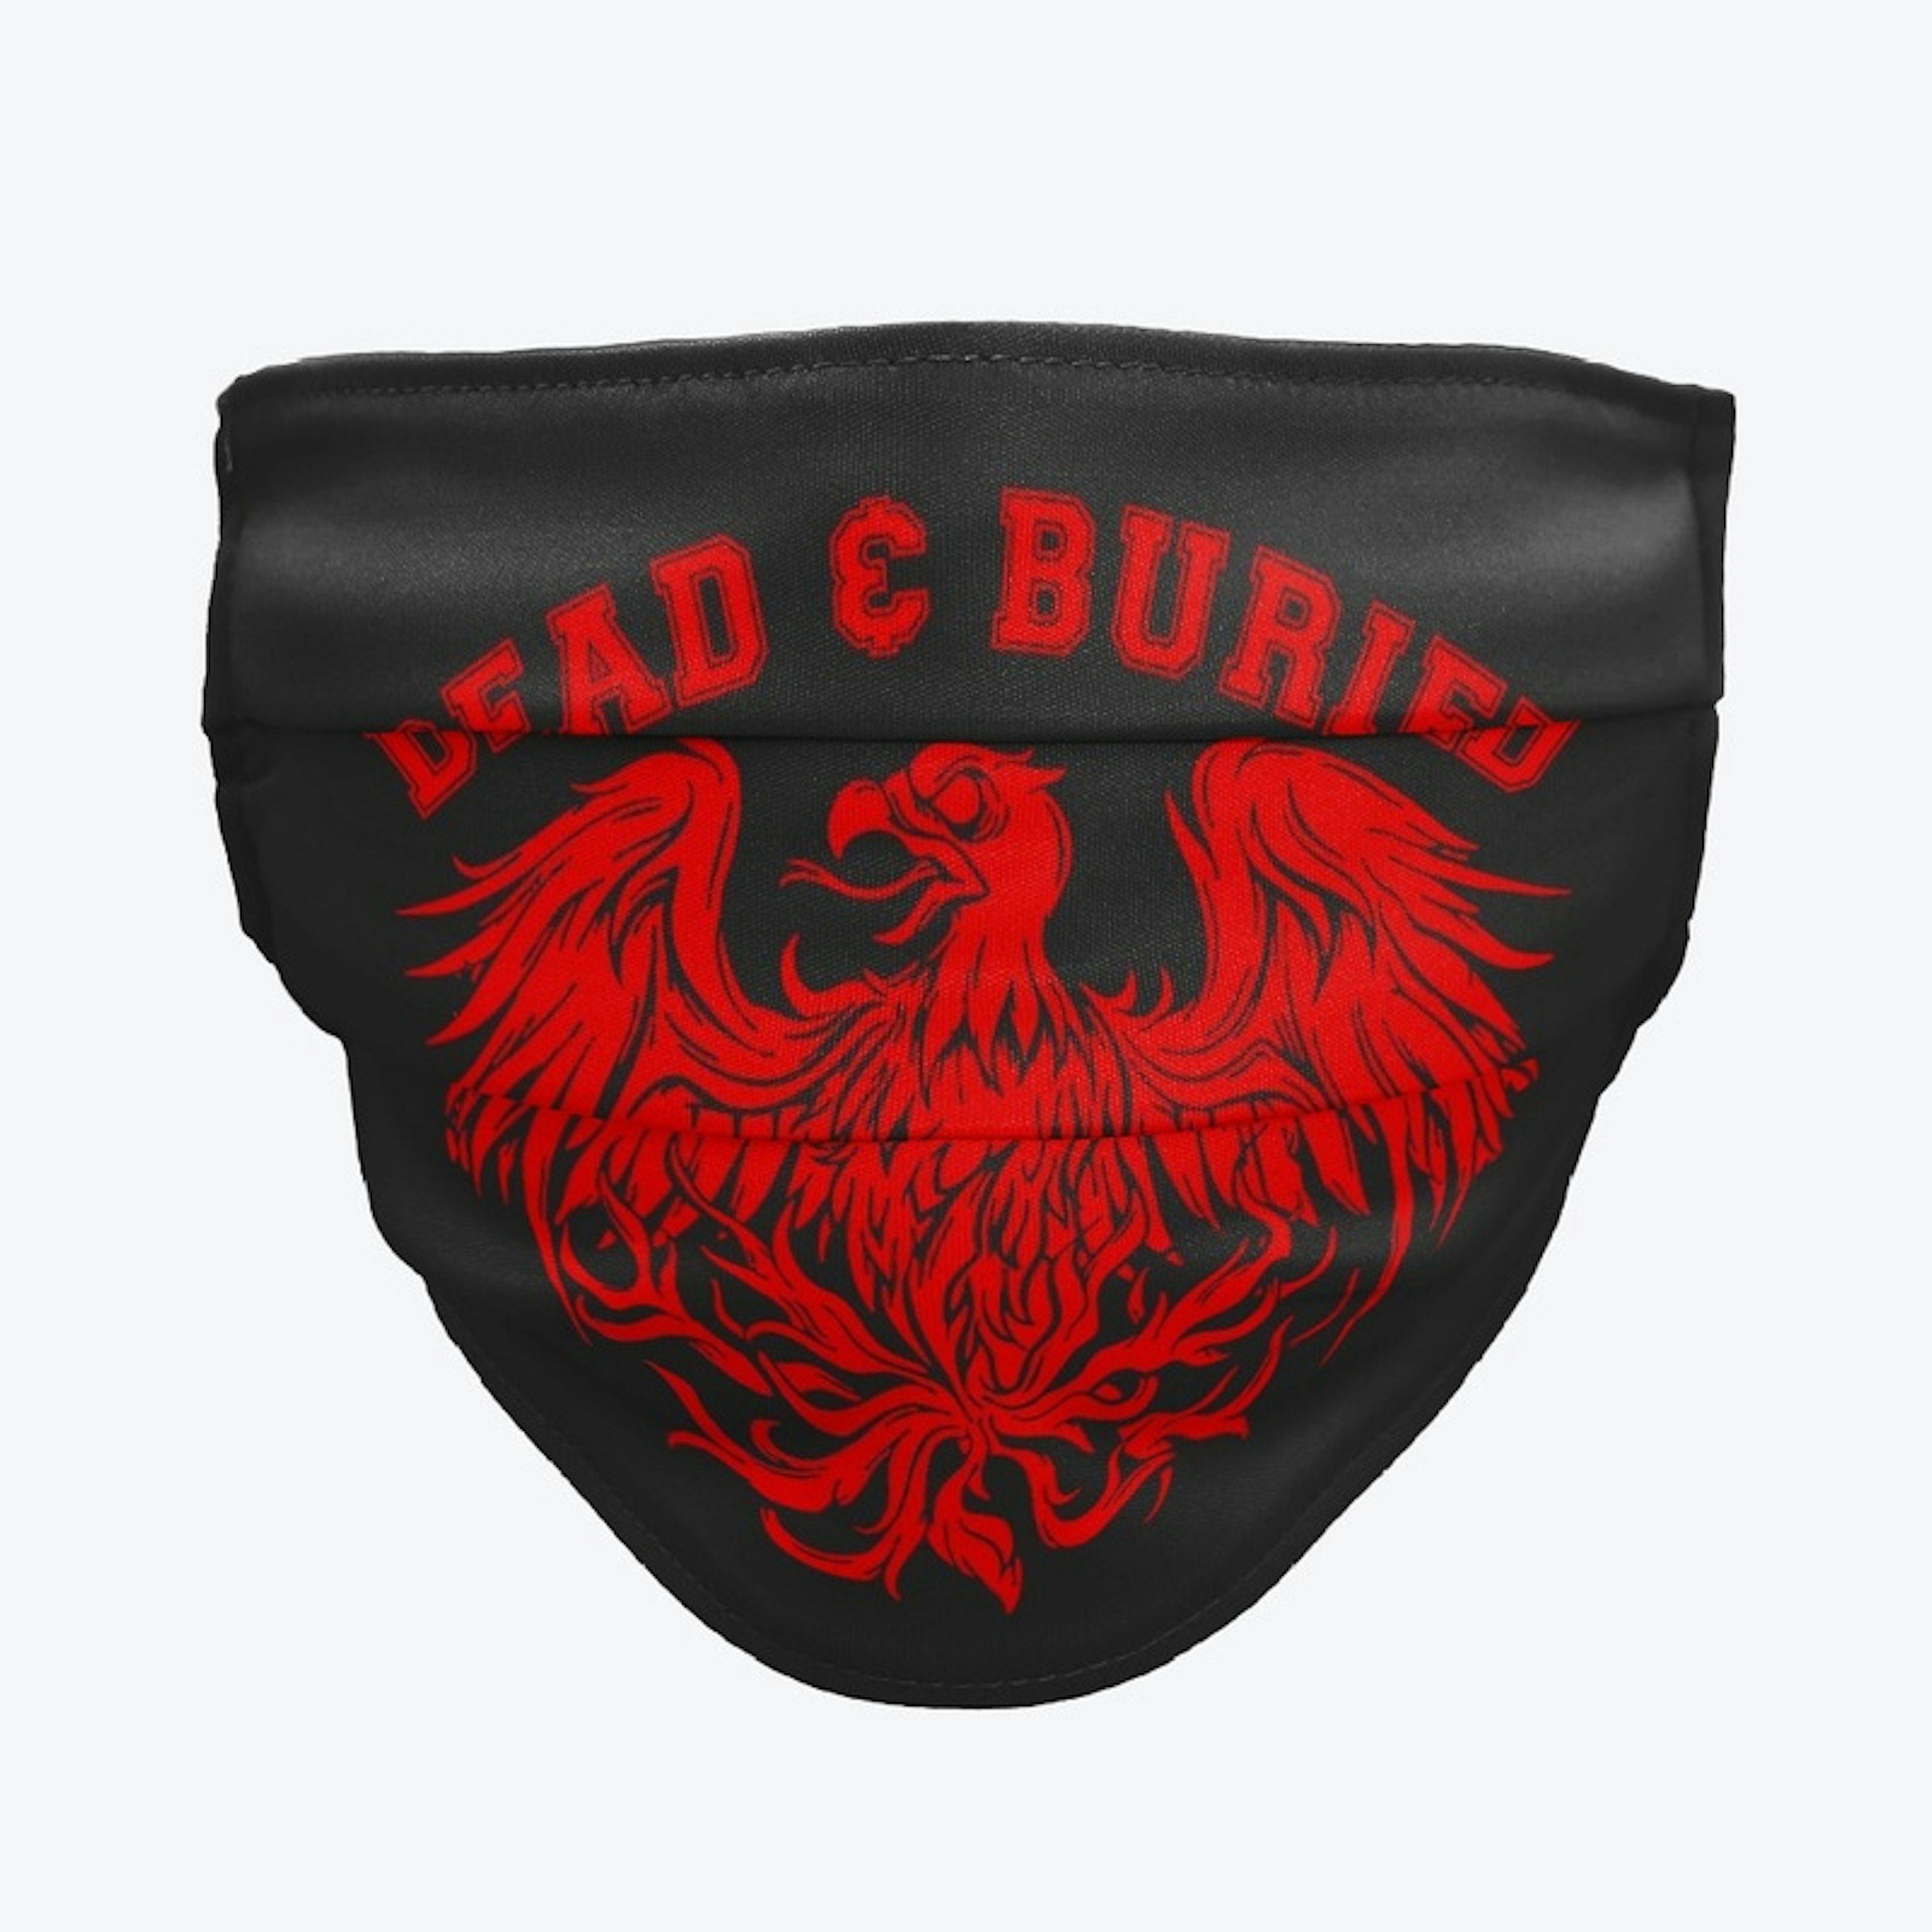 D&B red logo mask